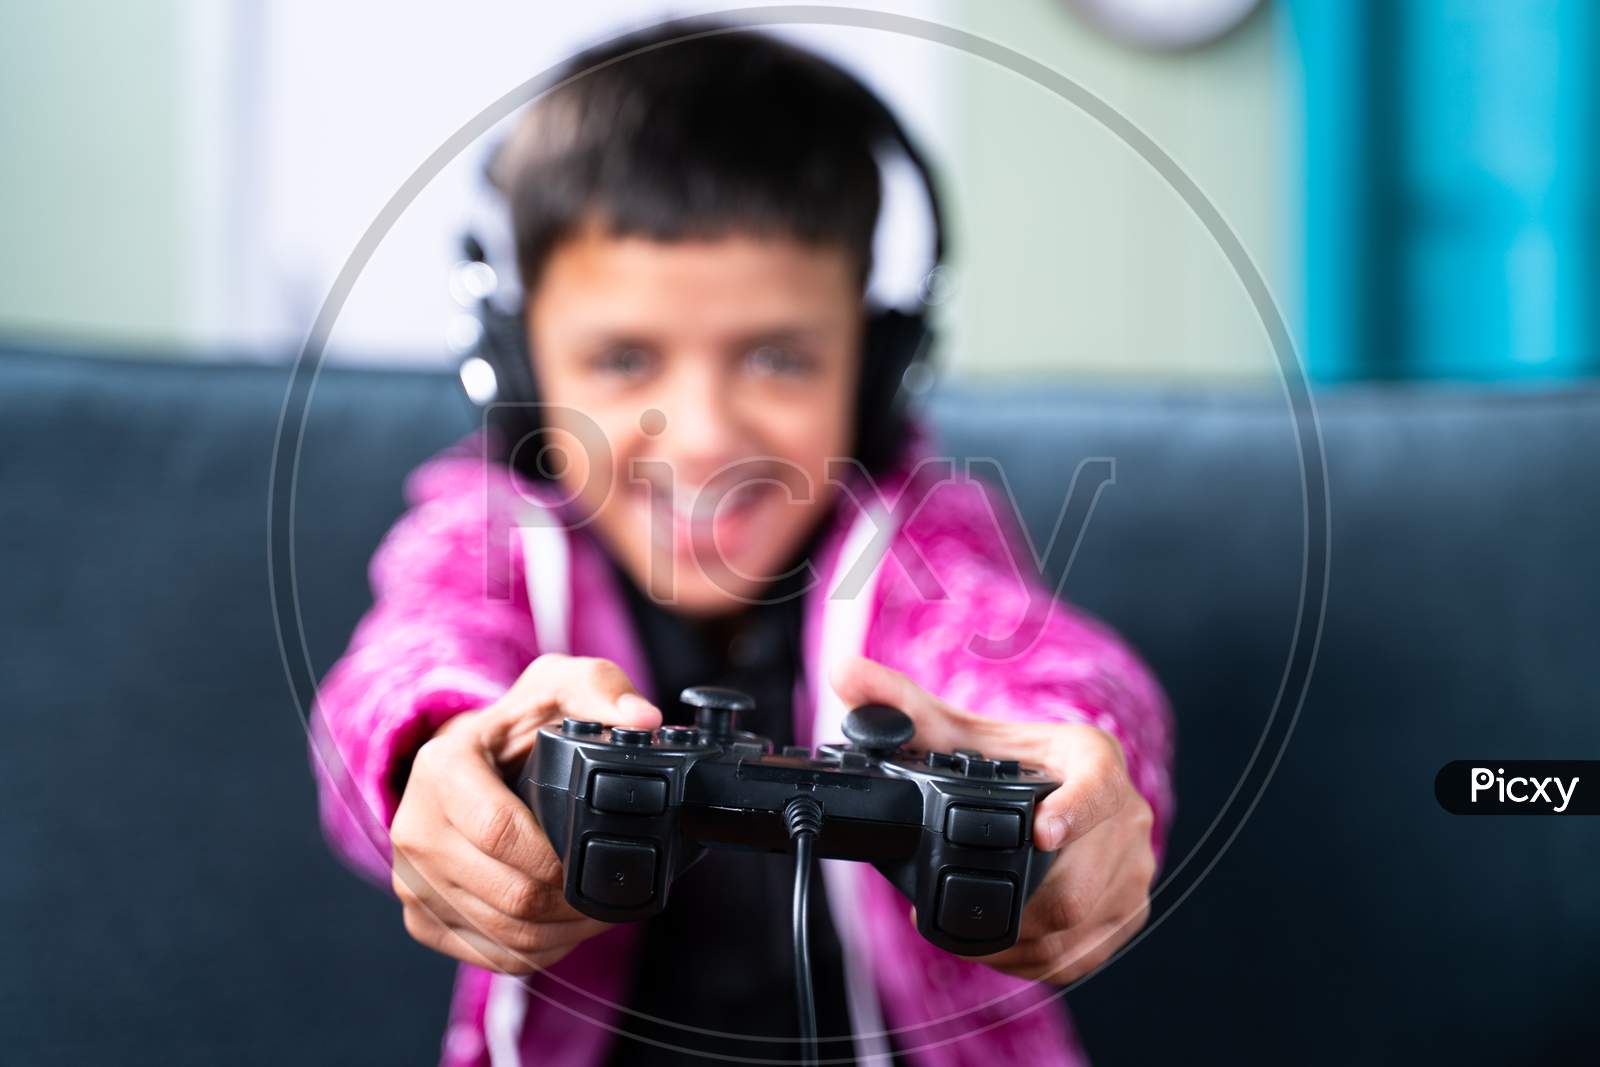 Close Up Selective Focus On Joystick, Kid Enjoying Videogame Using Gamepad At Home While Sitting On Sofa.